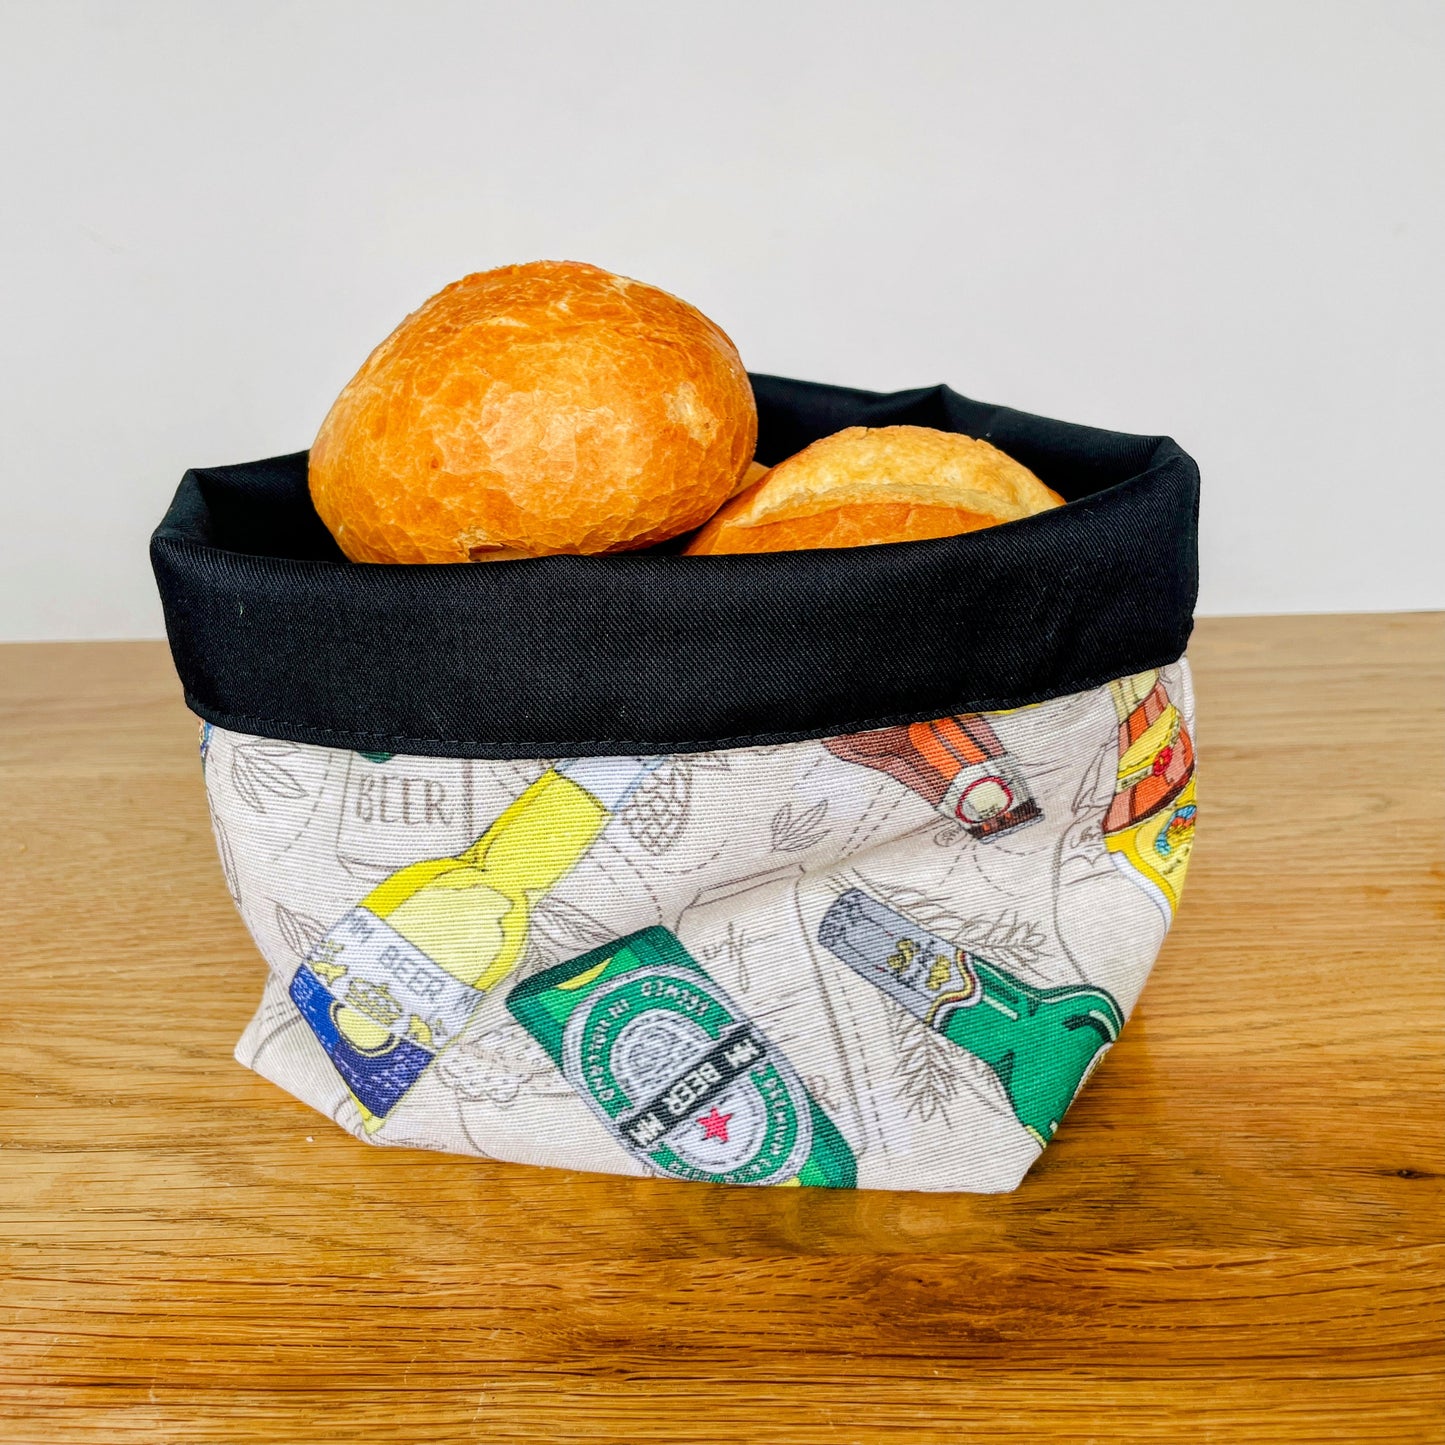 Bread basket beer motif | Bread bag beer bottle design | Bread bag made of fabric | Handmade